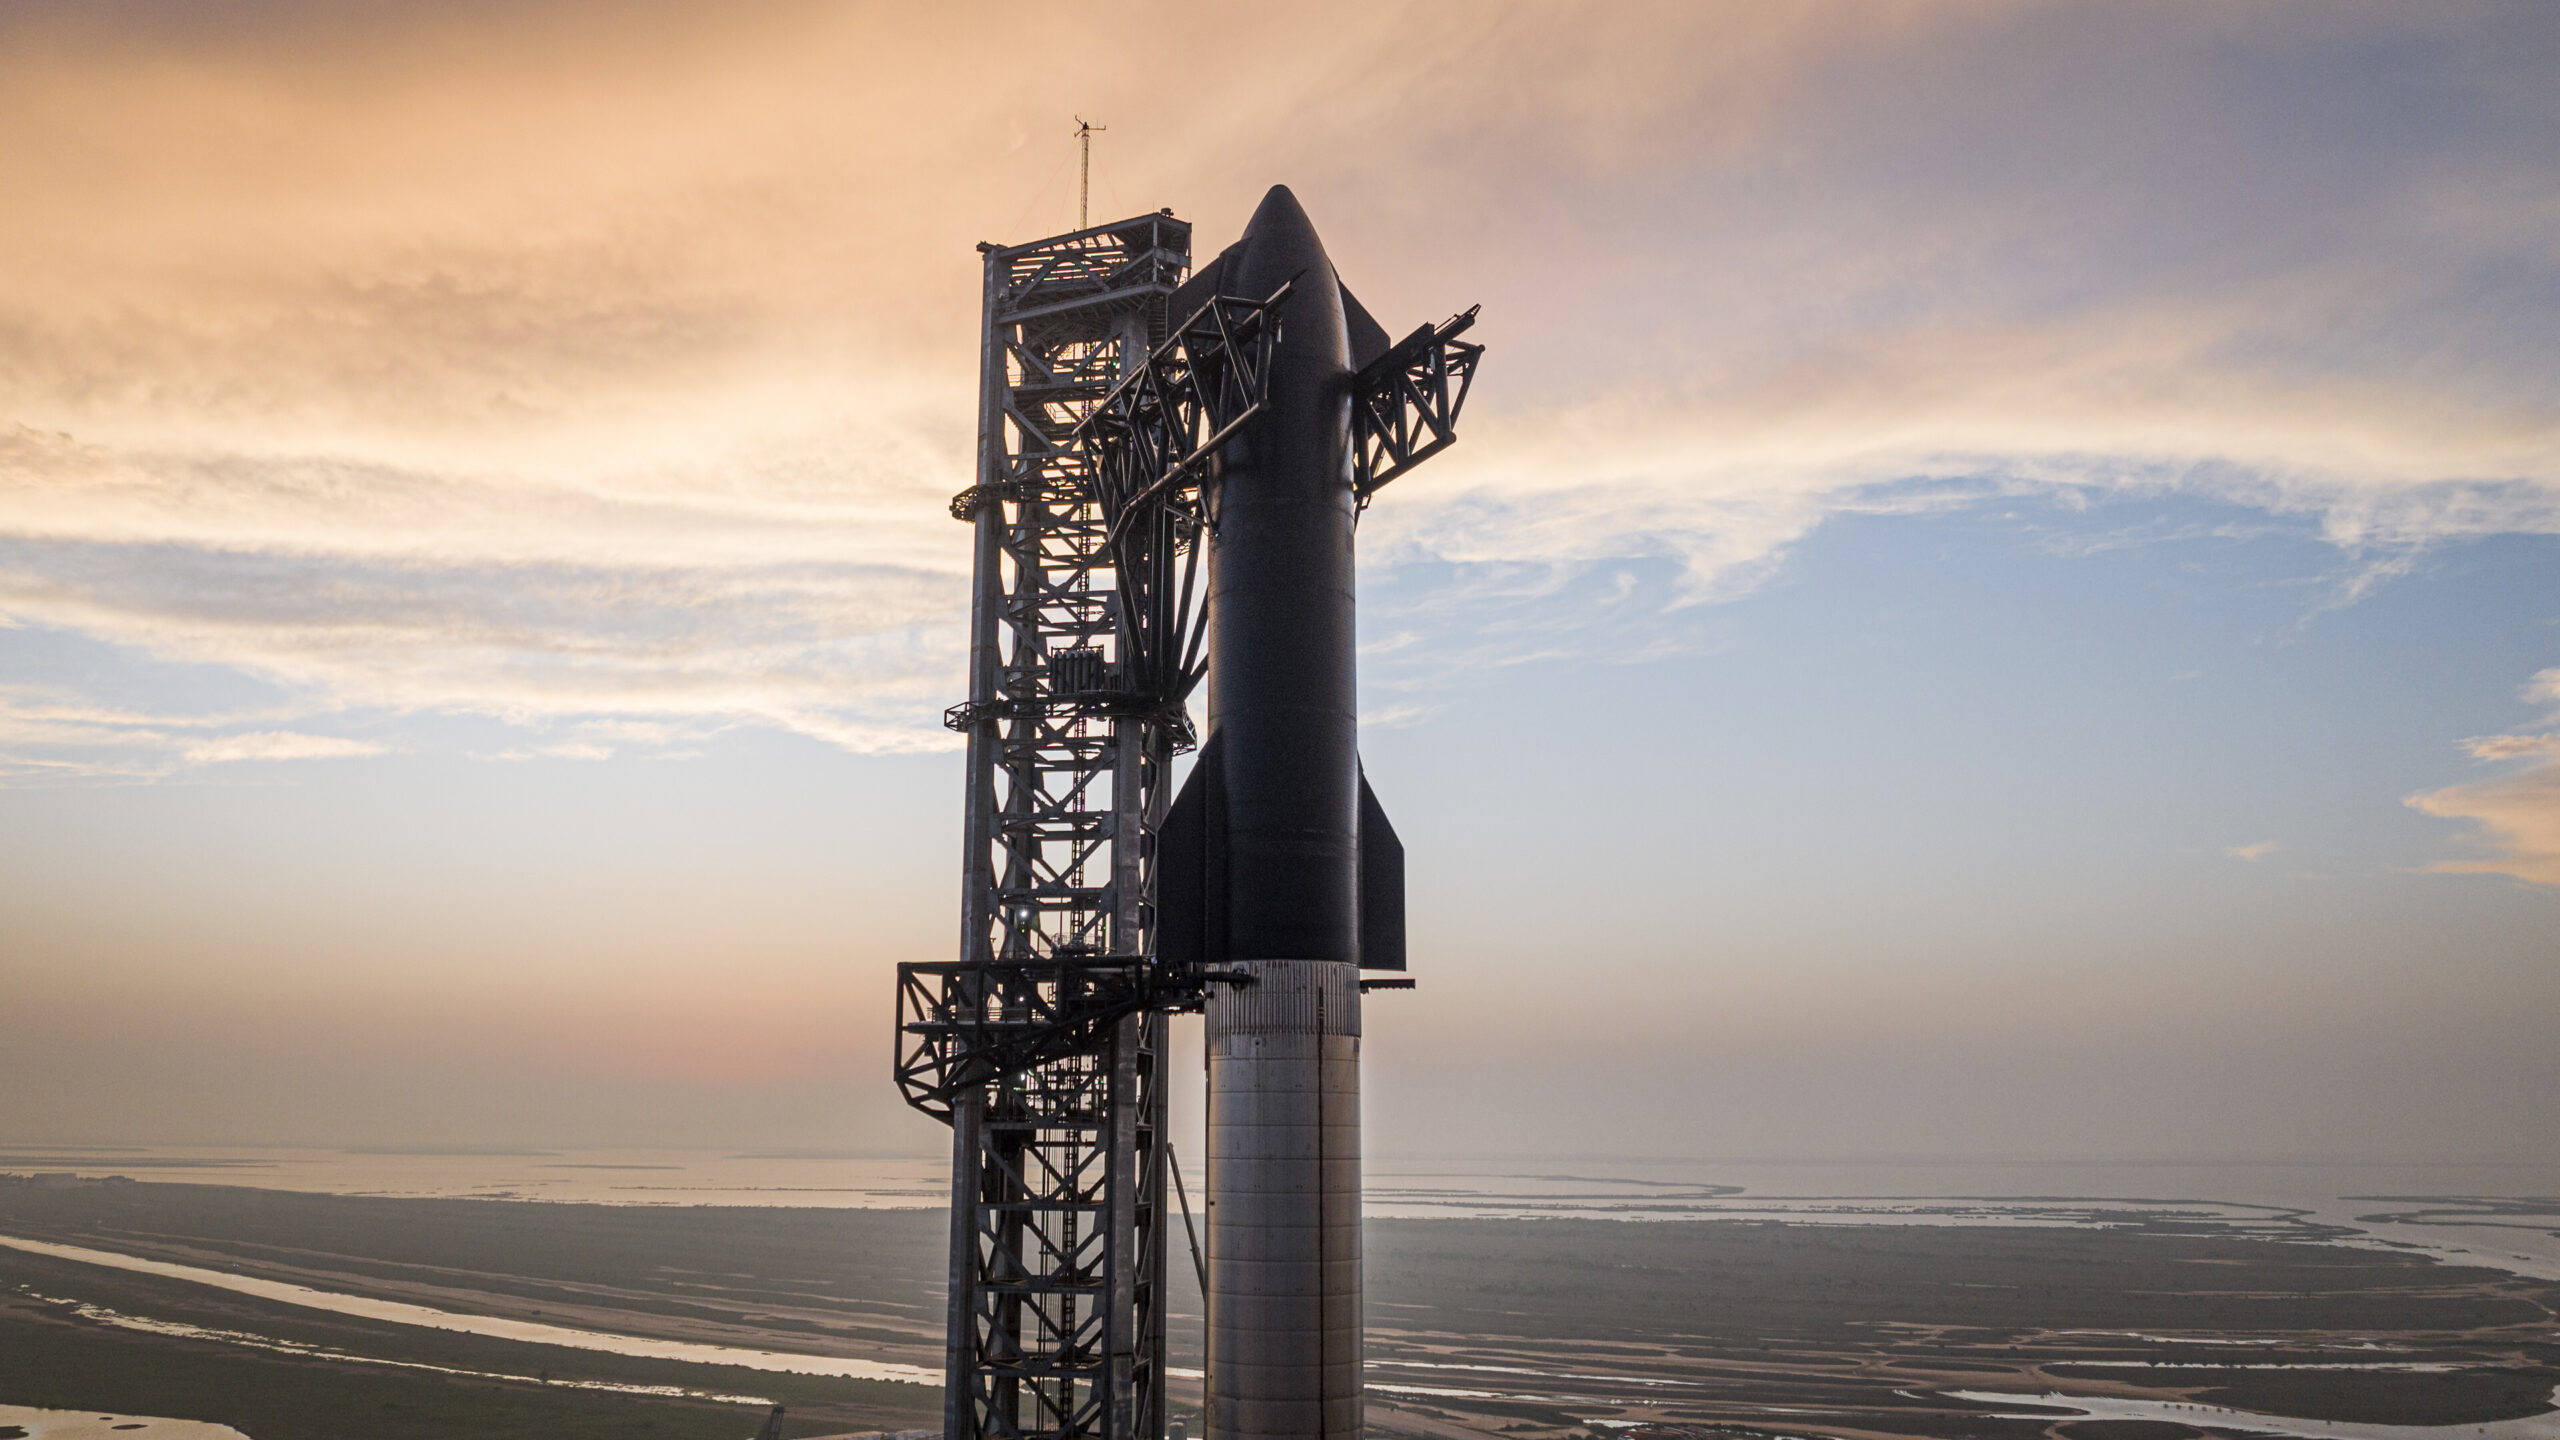 Fracaso de la Starship: un gran éxito para SpaceX